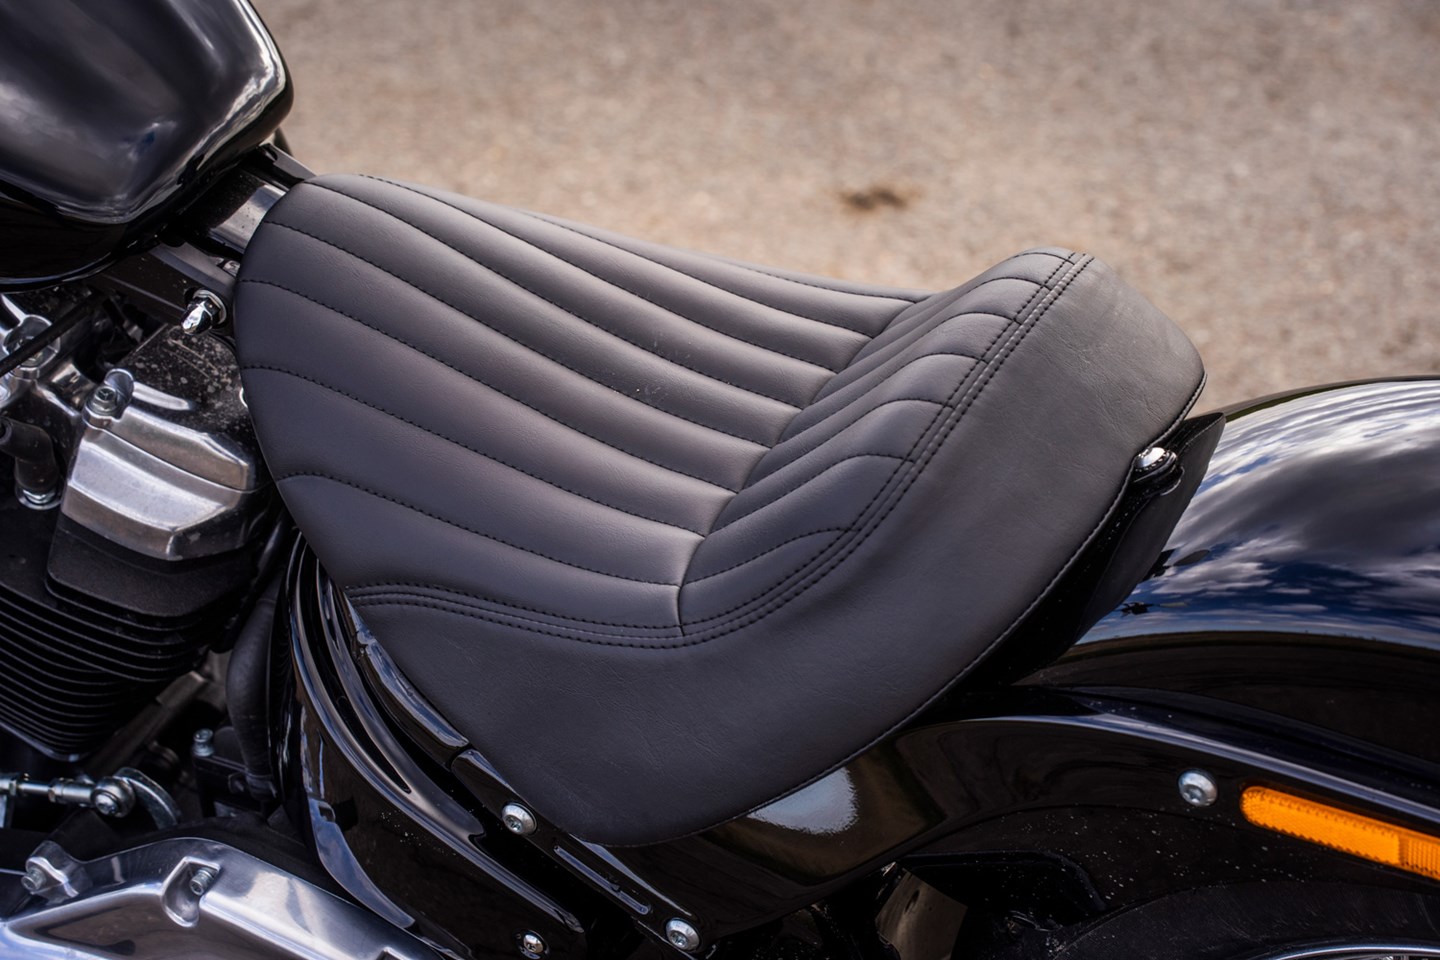 2020 Harley-Davidson Softail Standard review